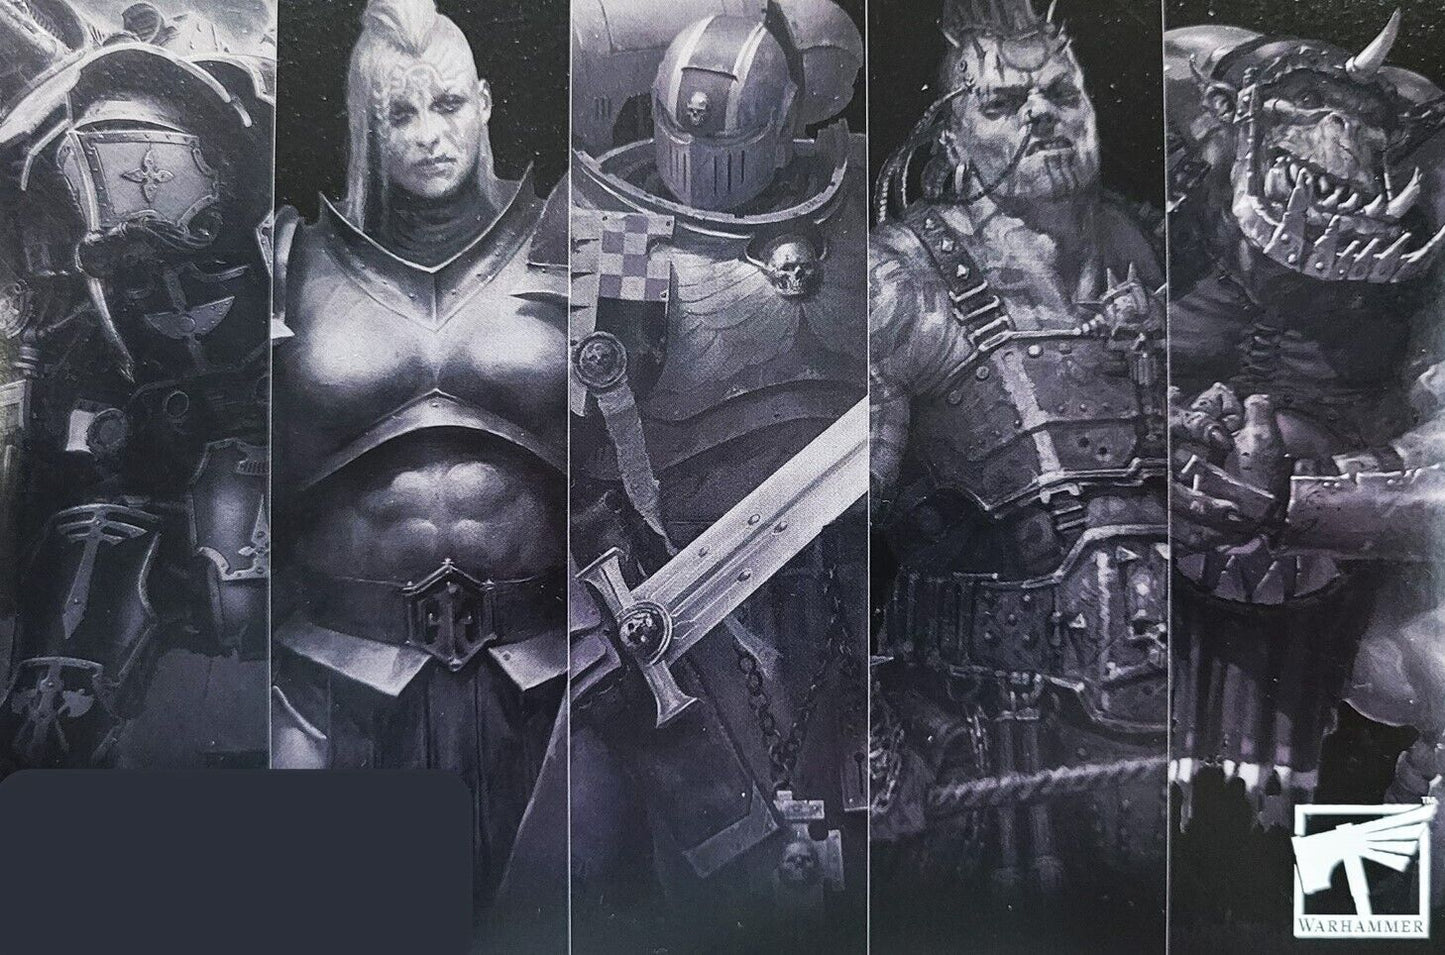 Hellstriders of Slaanesh Hedonites of Slaanesh Warhammer AoS NIB!        WBGames